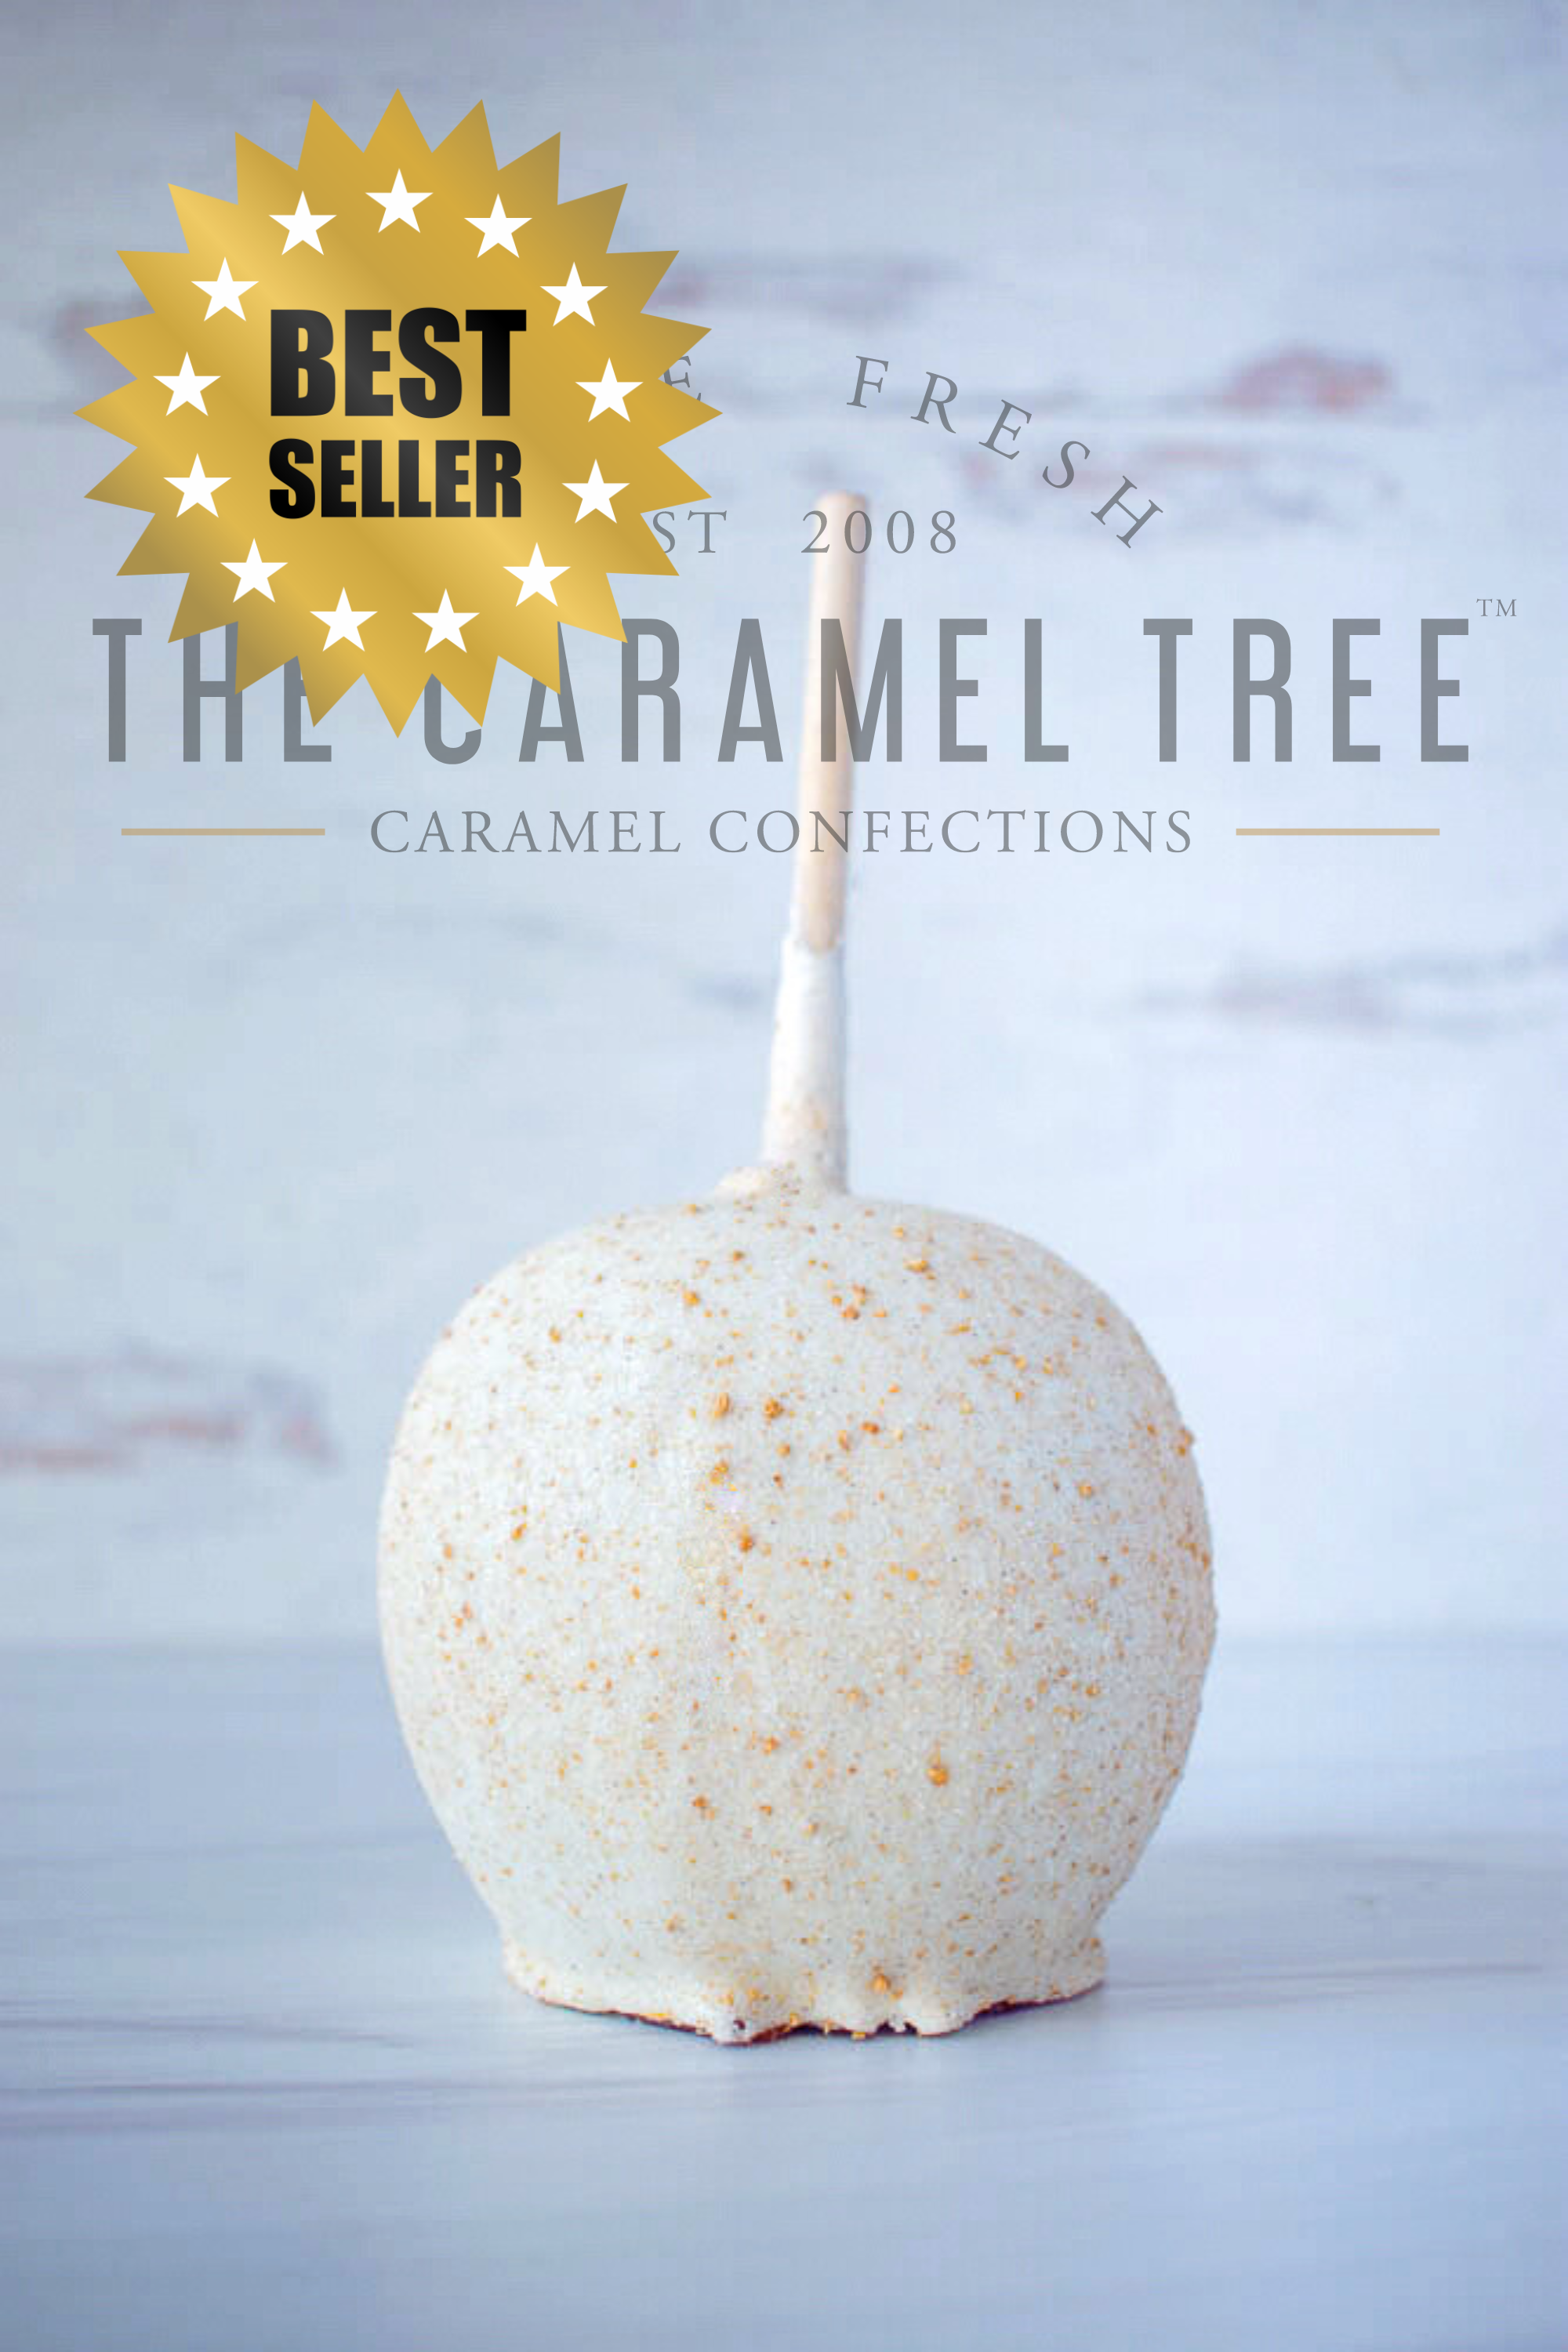 the caramel tree apple pie caramel apple with logo best seller